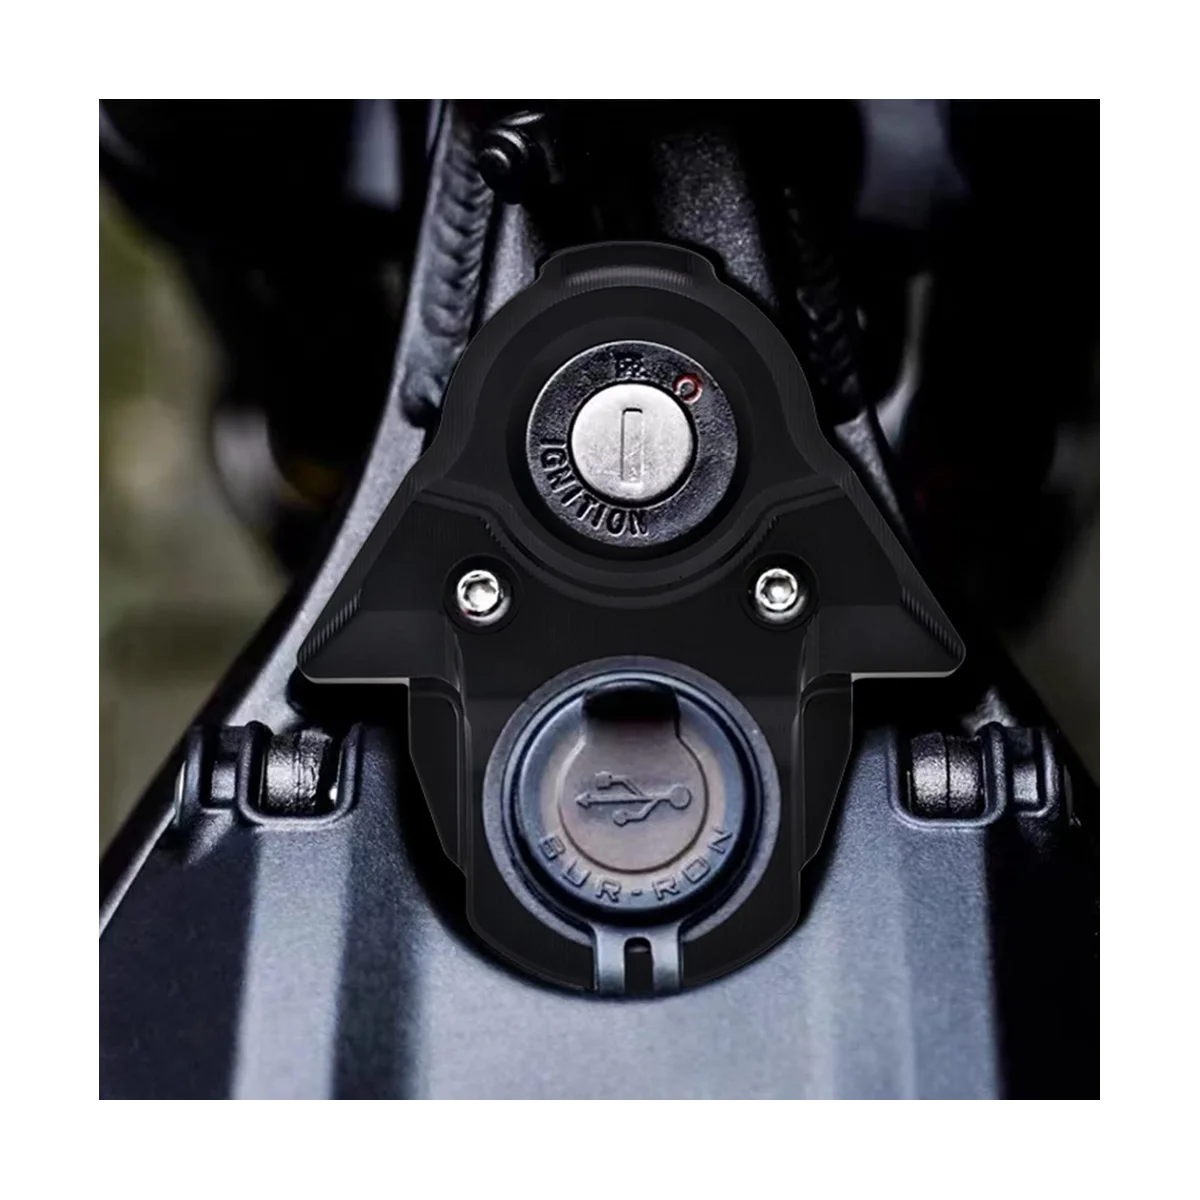 Aprindere Capac, Motocicleta Capac Decorativ pentru Sur Ron Lumină de Albine X/S Segway X260 X 160 Electric Dirt Bike - Negru . ' - ' . 4